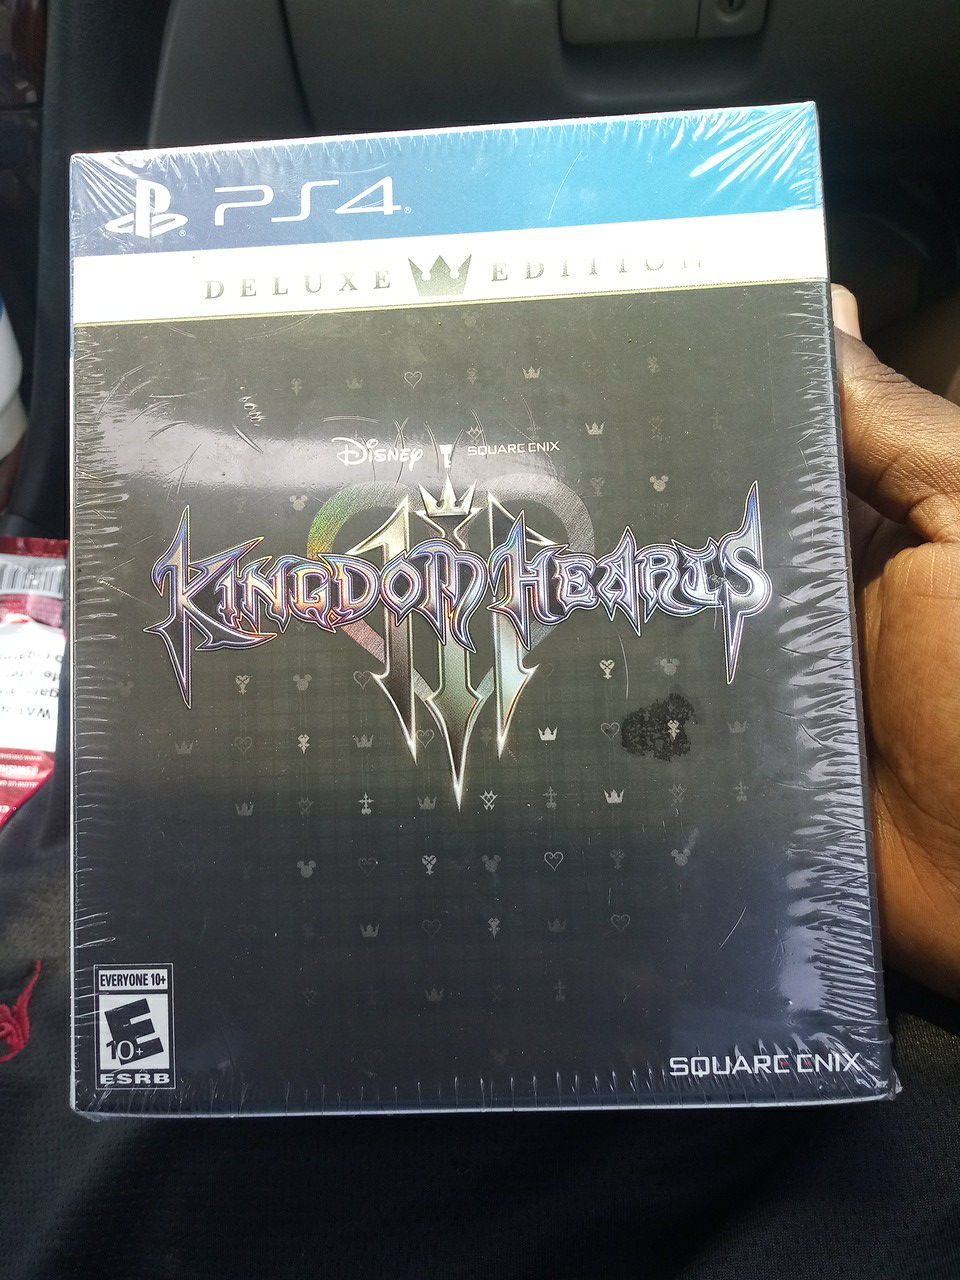 Kingdom hearts 3 deluxe edition